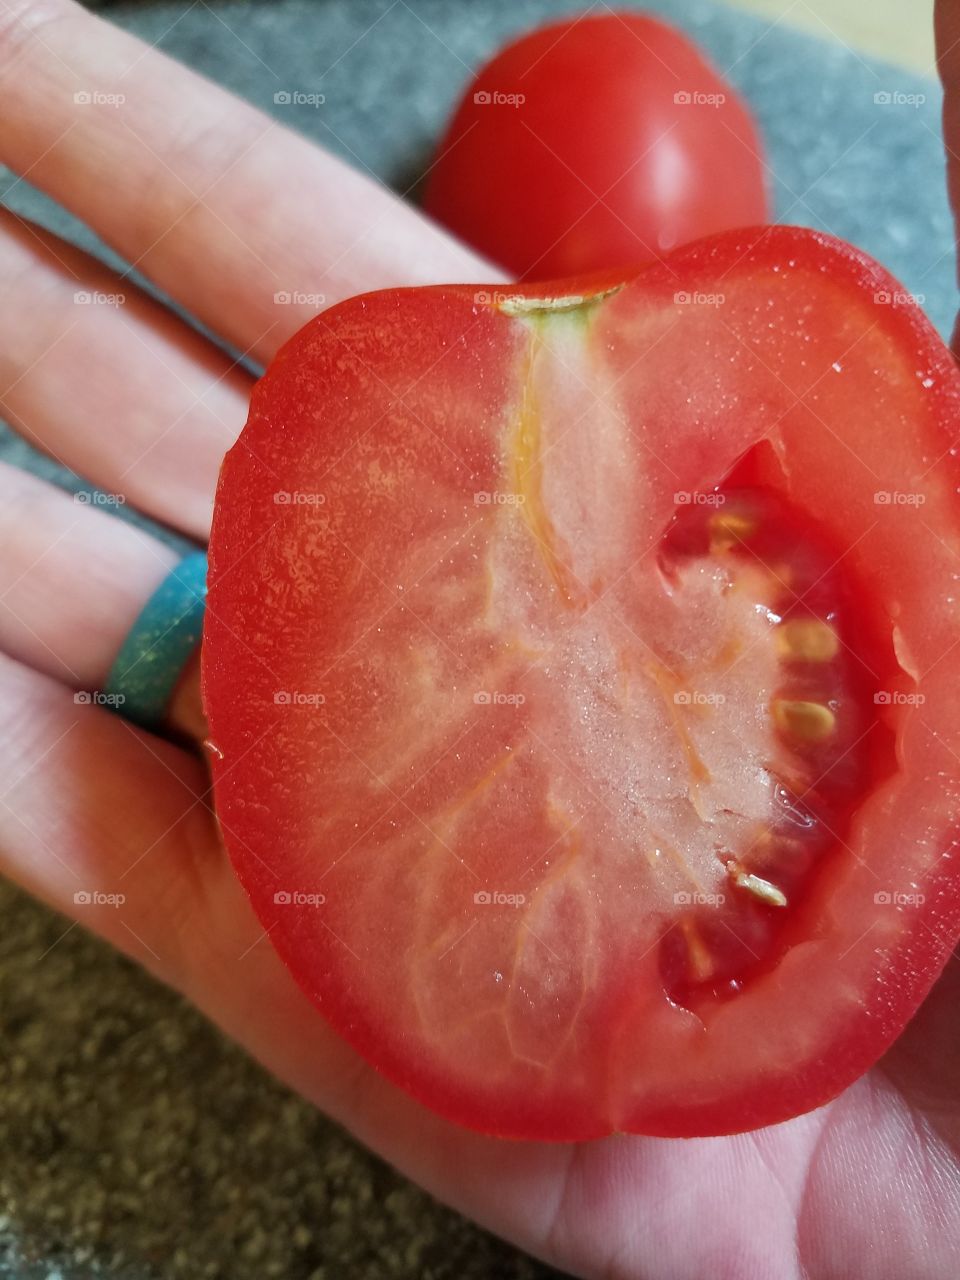 Holding food  tomato 2